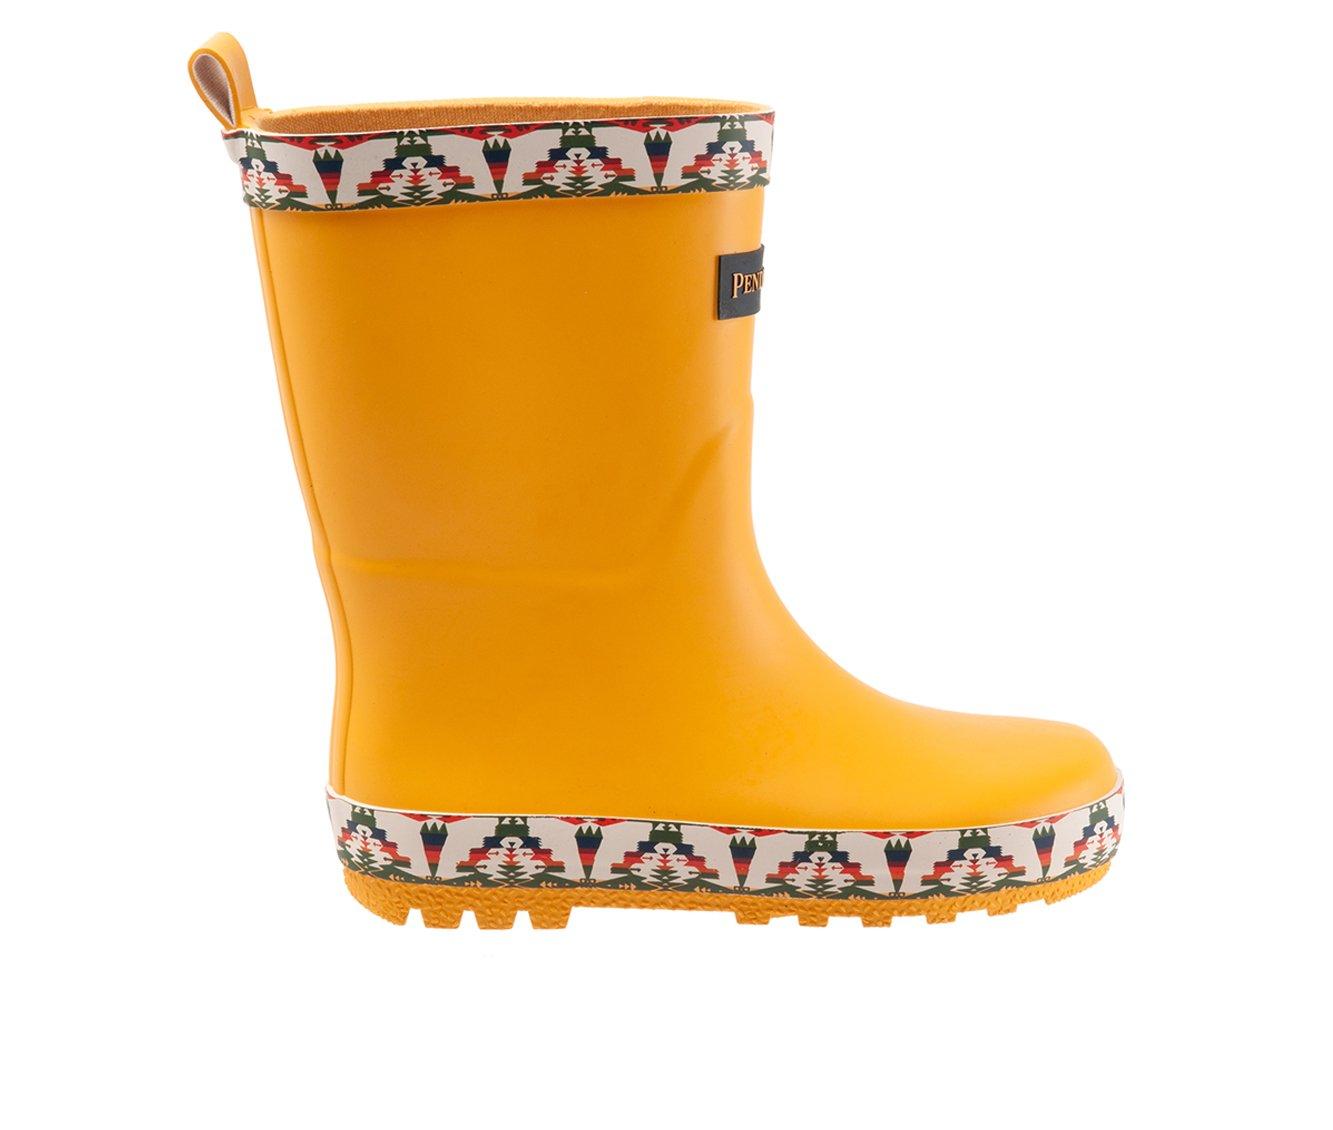 Kids' Pendleton Toddler Tuscon Mid Waterproof Rain Boots